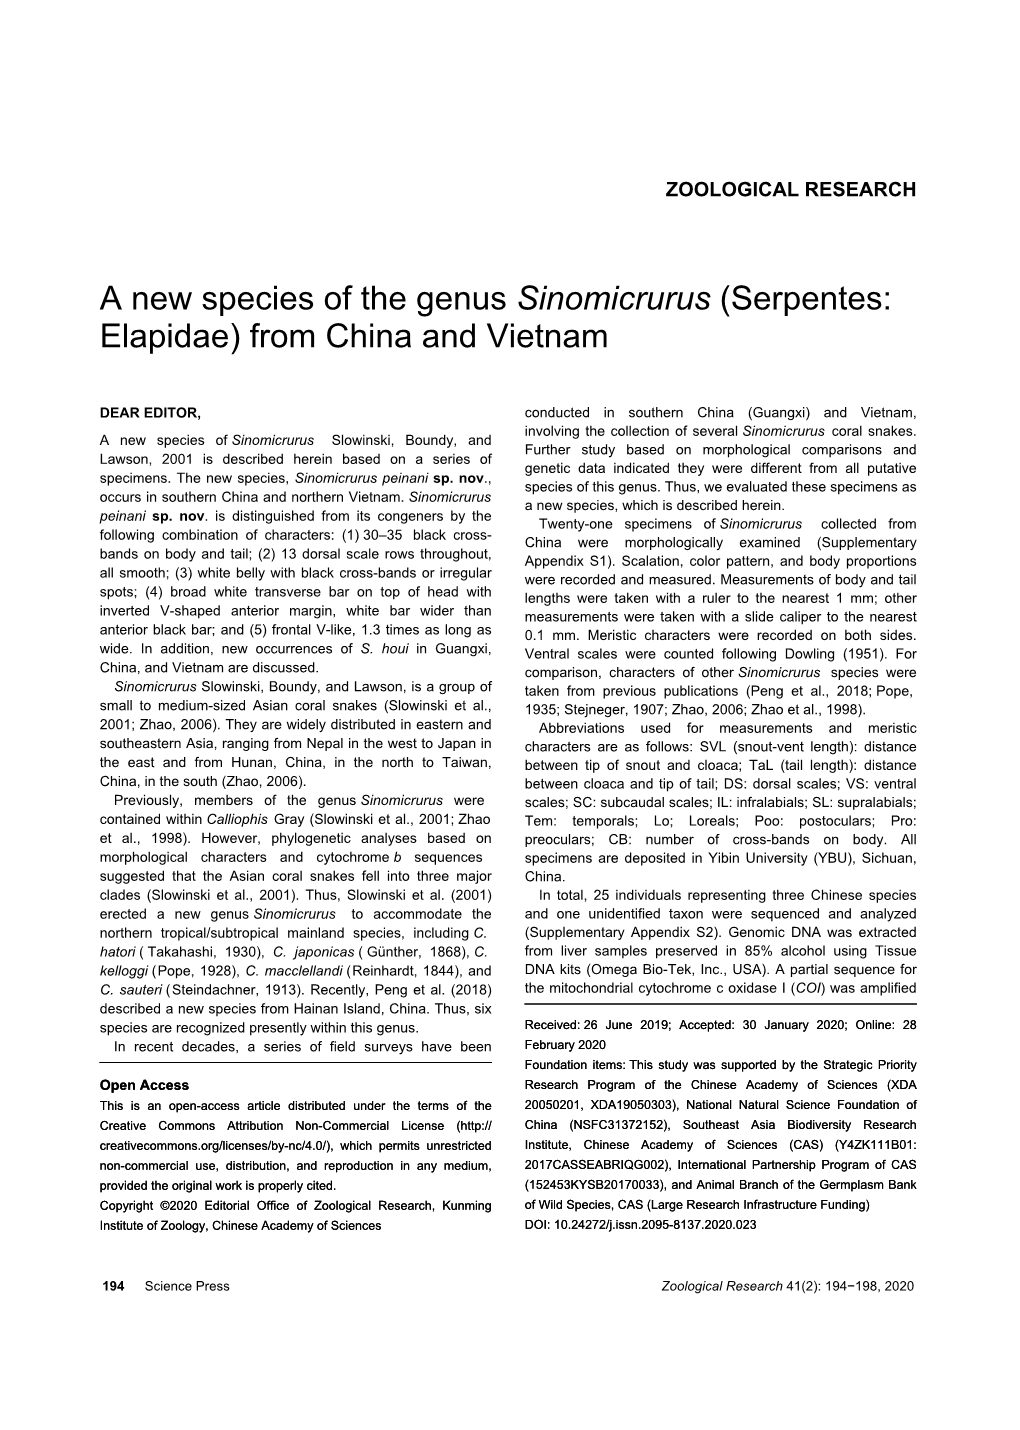 A New Species of the Genus Sinomicrurus (Serpentes: Elapidae) from China and Vietnam